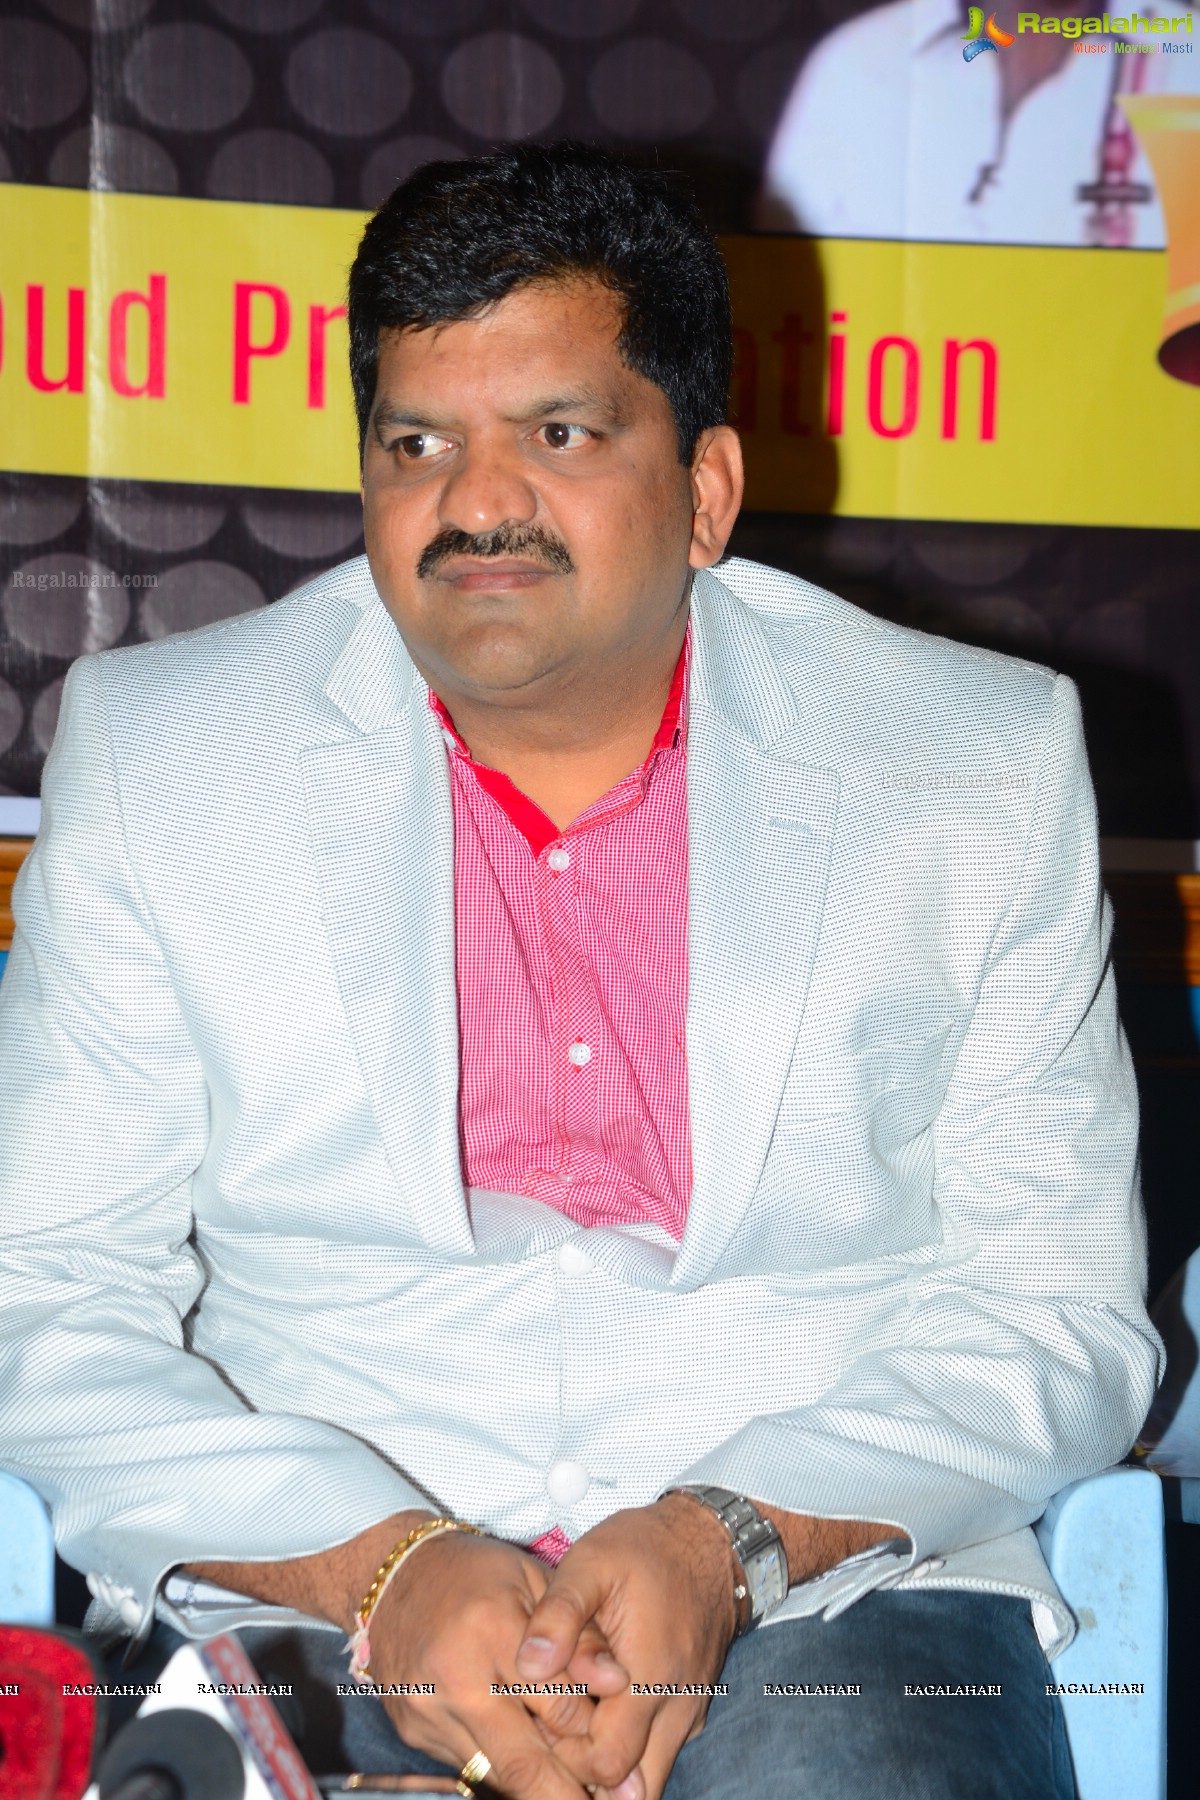 Gulf Andhra Music Awards (GAMA) 2013 Press Meet